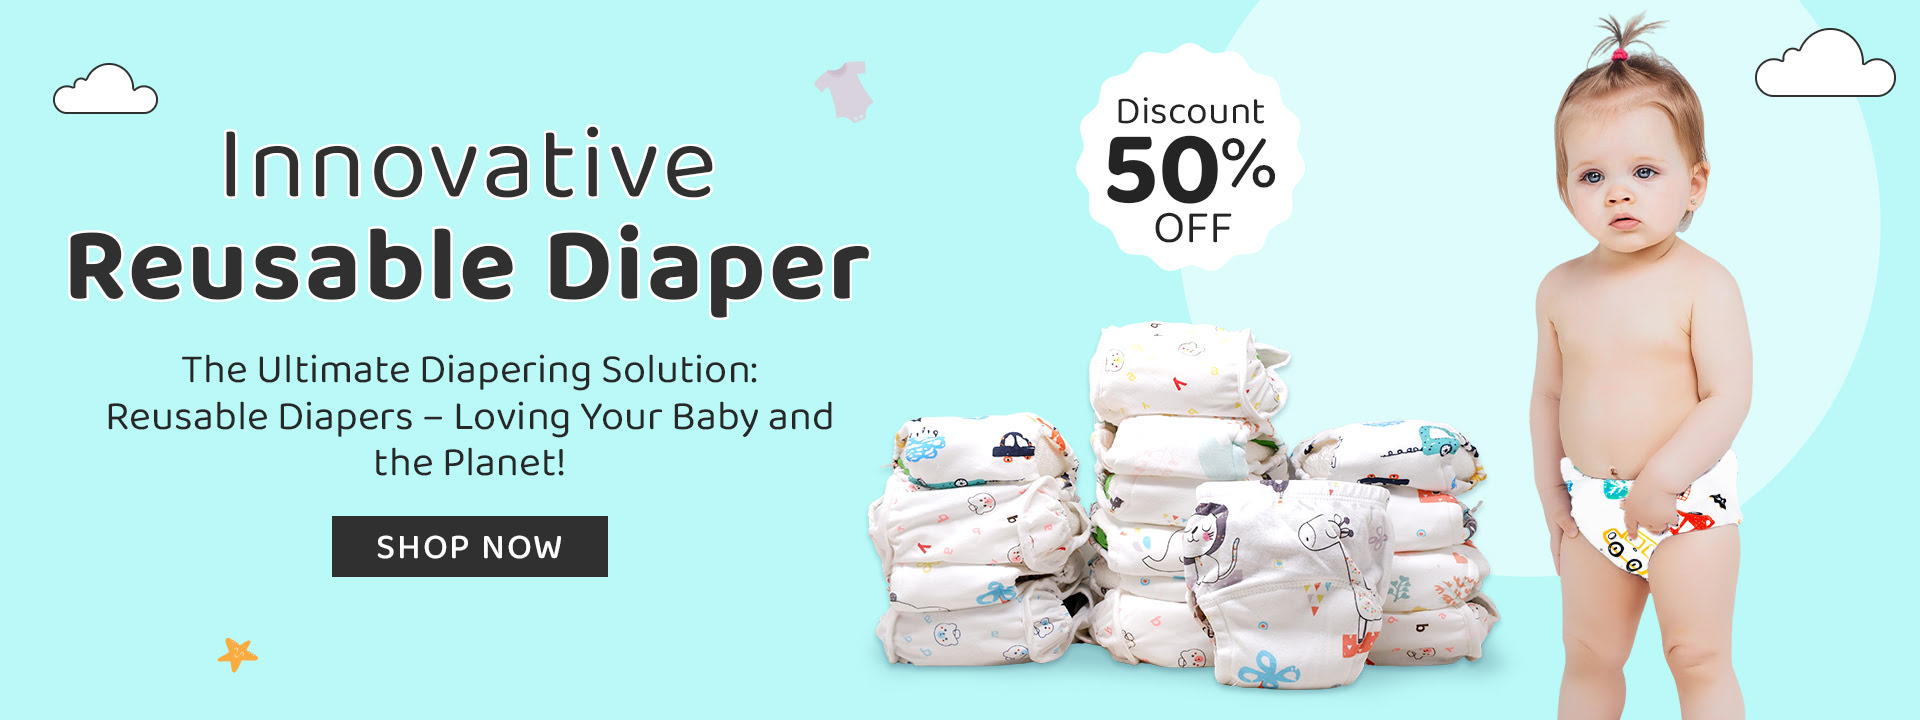 Innovative Reusable Diaper